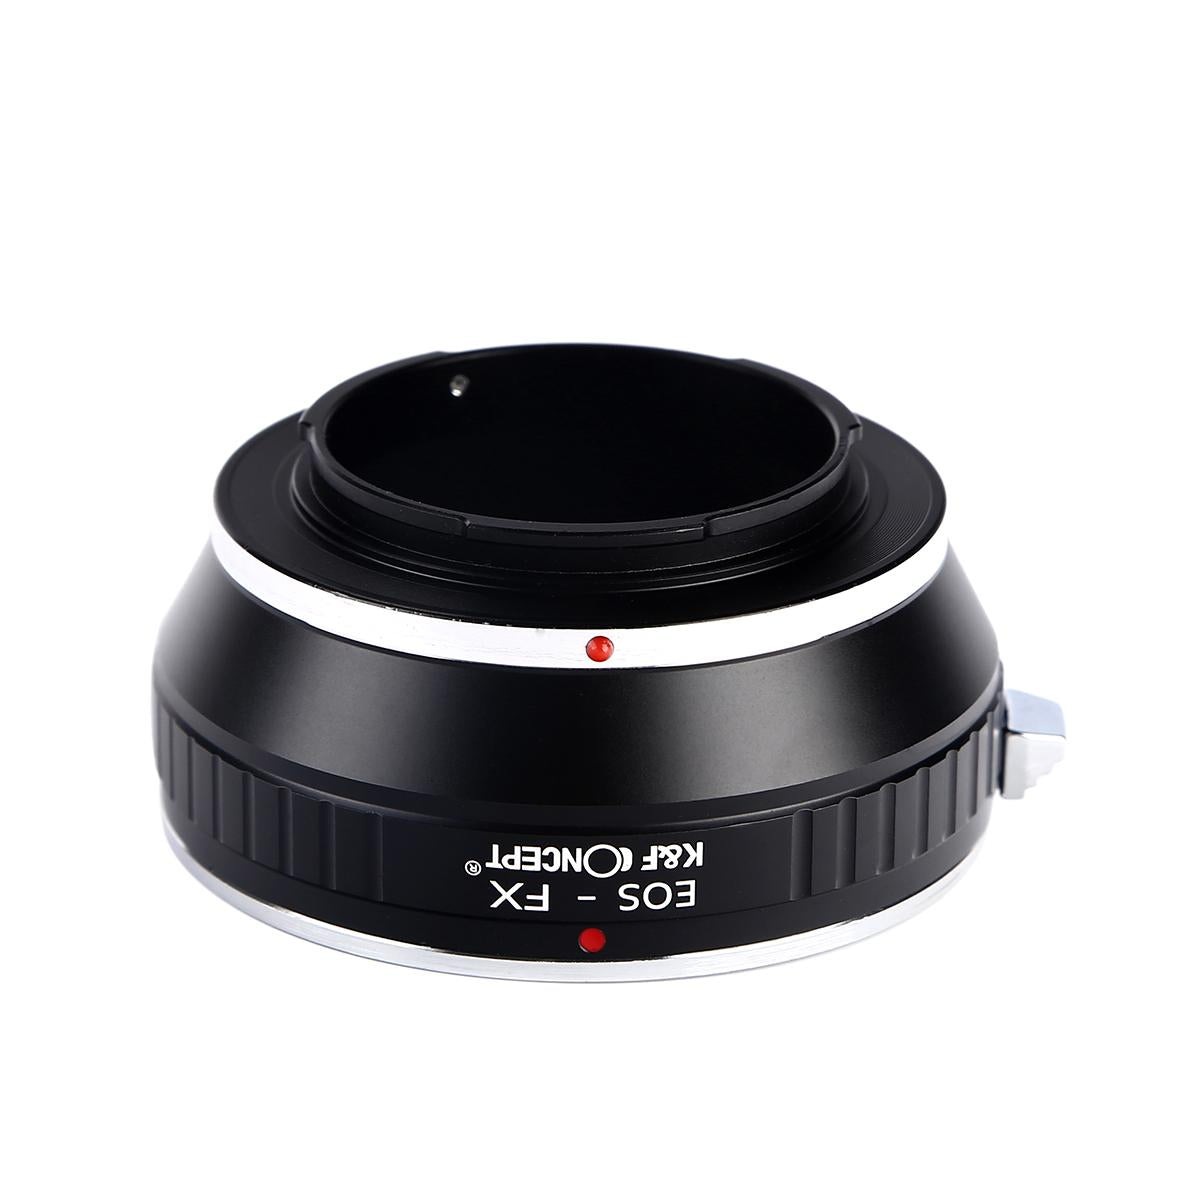 K&F Concept Lens Mount Adapter EOS EF/EFS Lens to Fuji FX Mount X-Pro1 X Camera X-Series Mirrorless Cameras